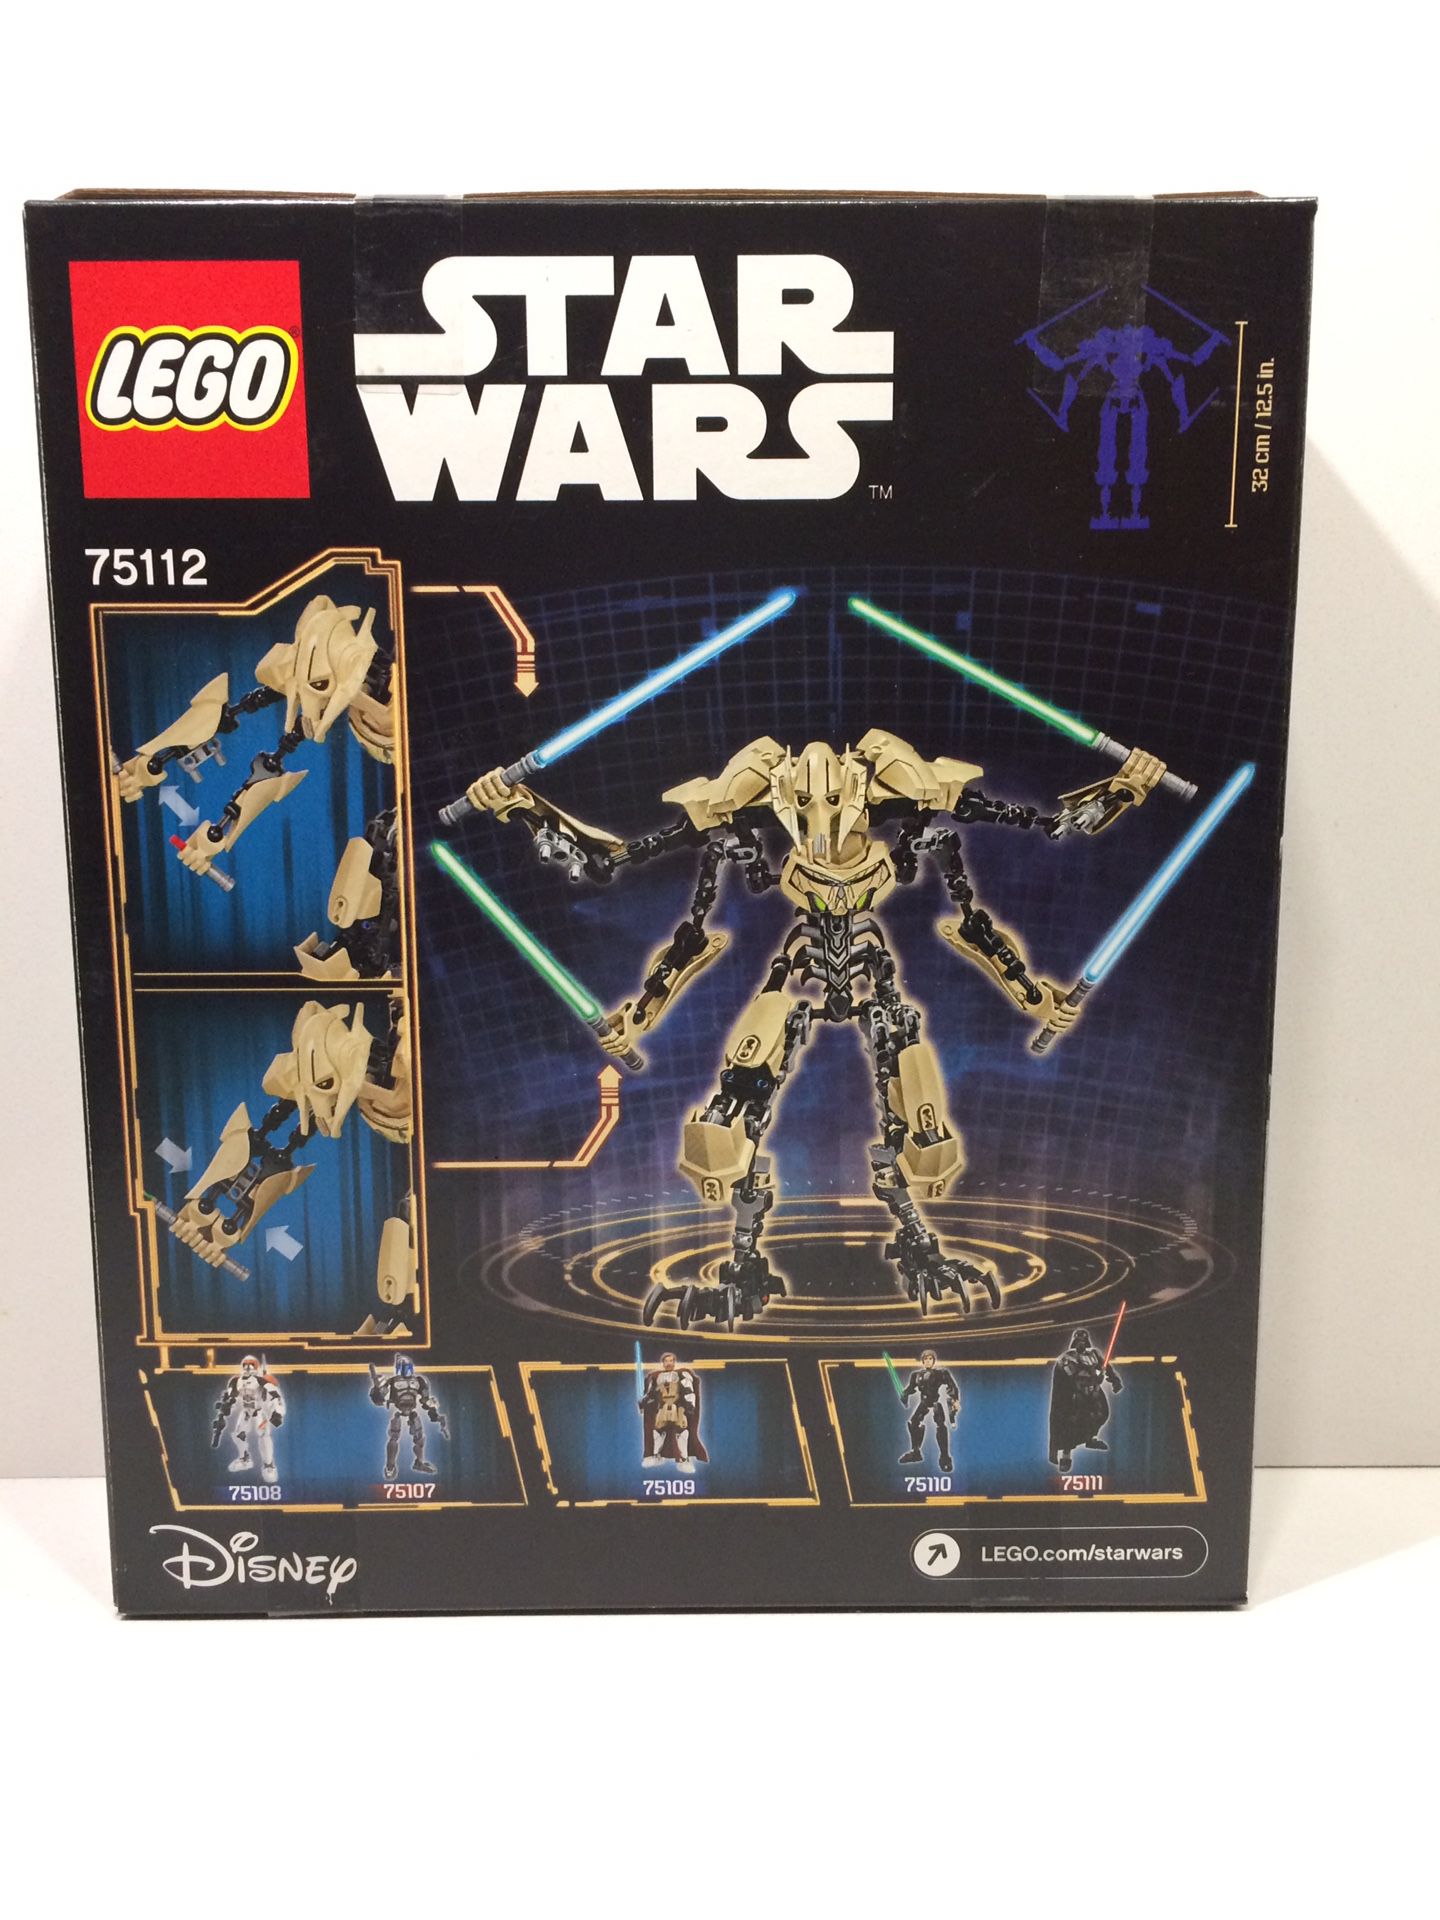 Star Wars General LEGO 75112 for Sale in San Diego, CA - OfferUp